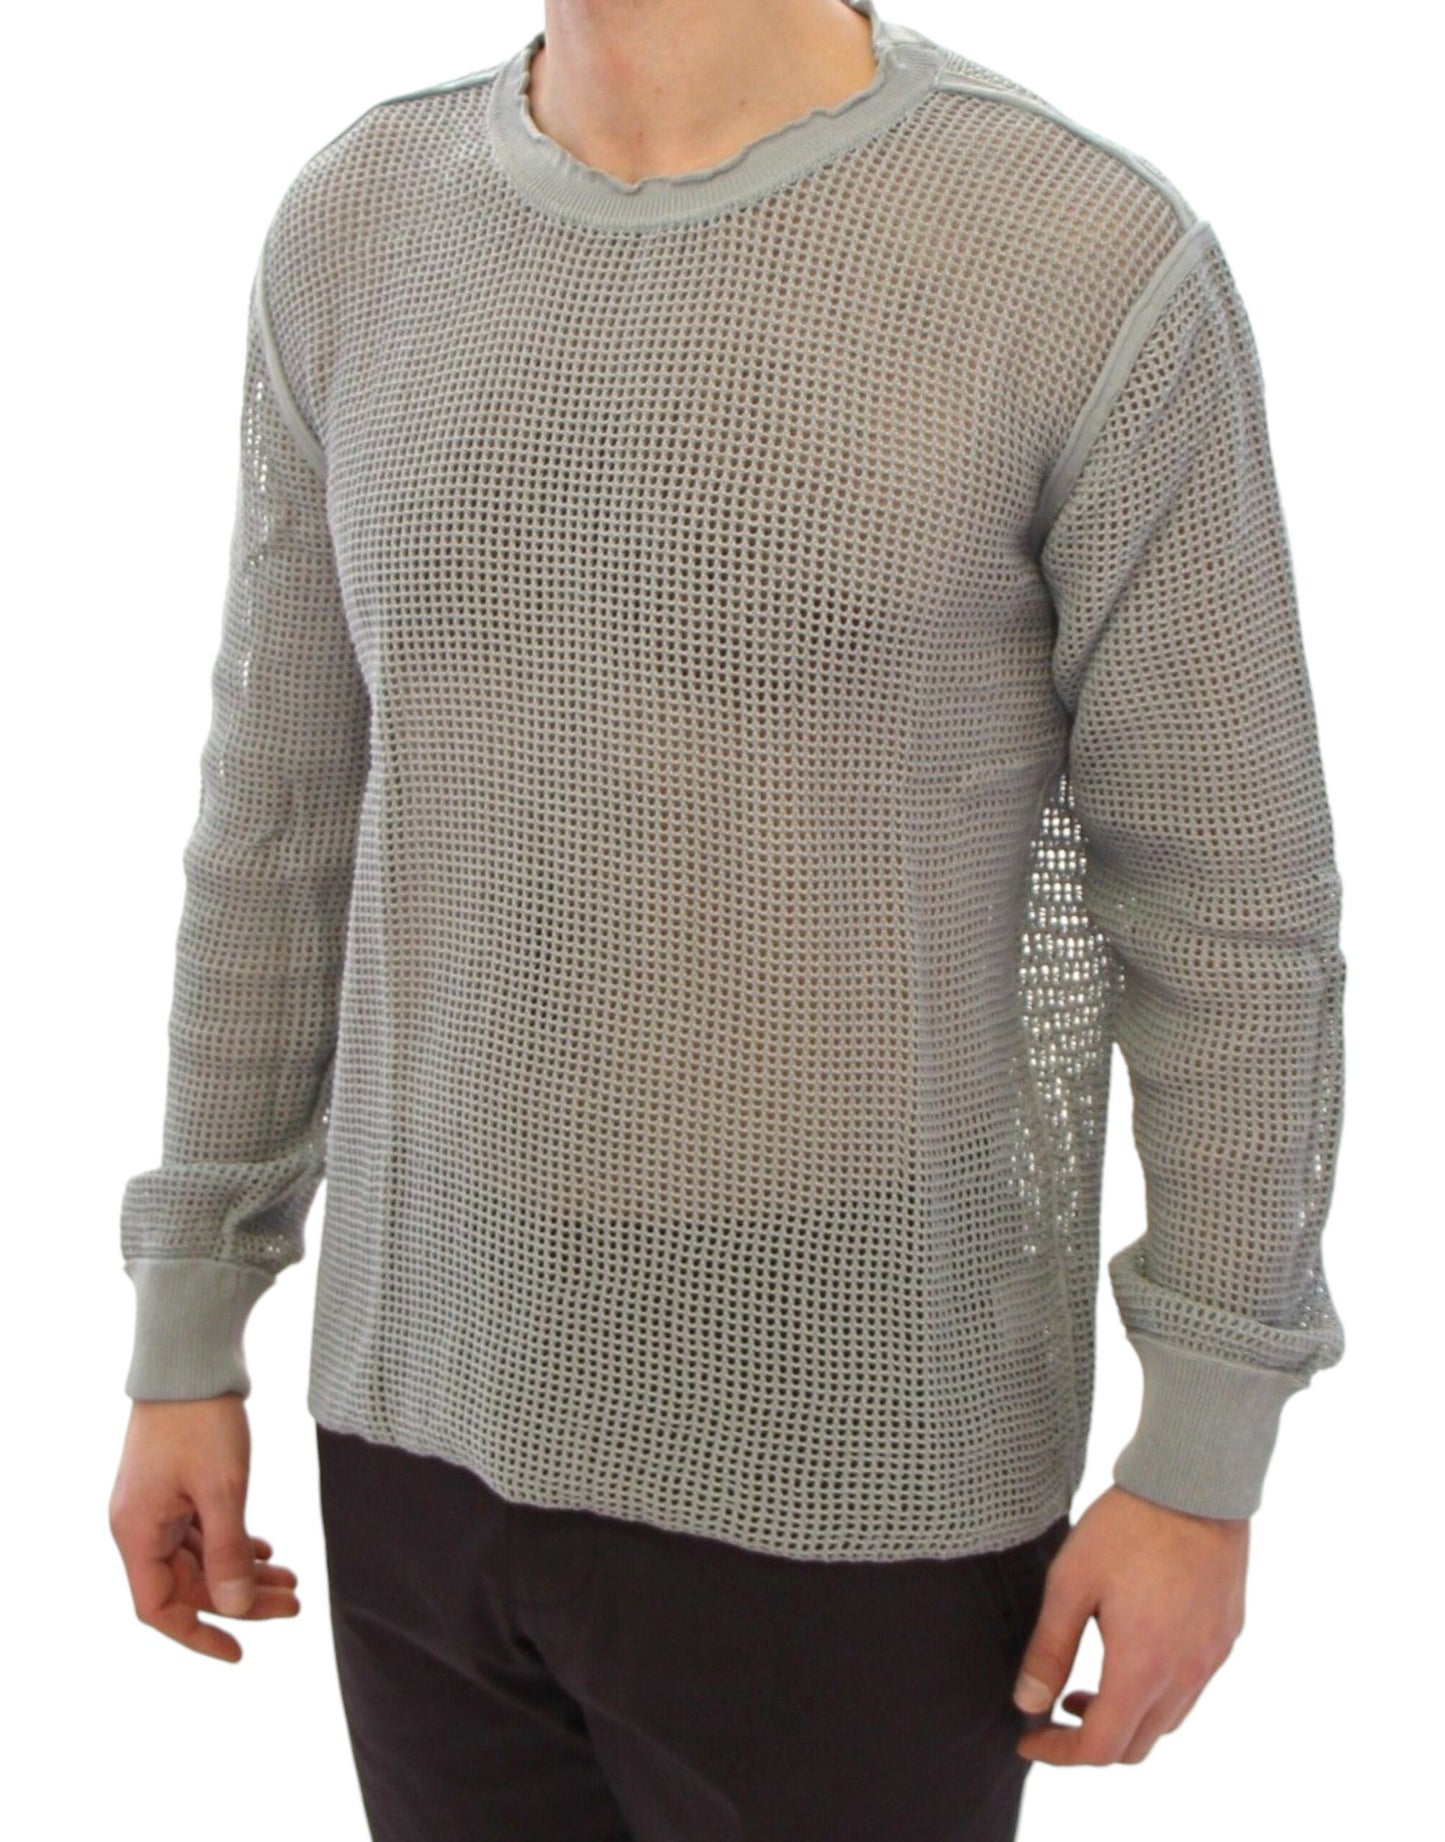 Elegant Gray Netted Crew-Neck Sweater